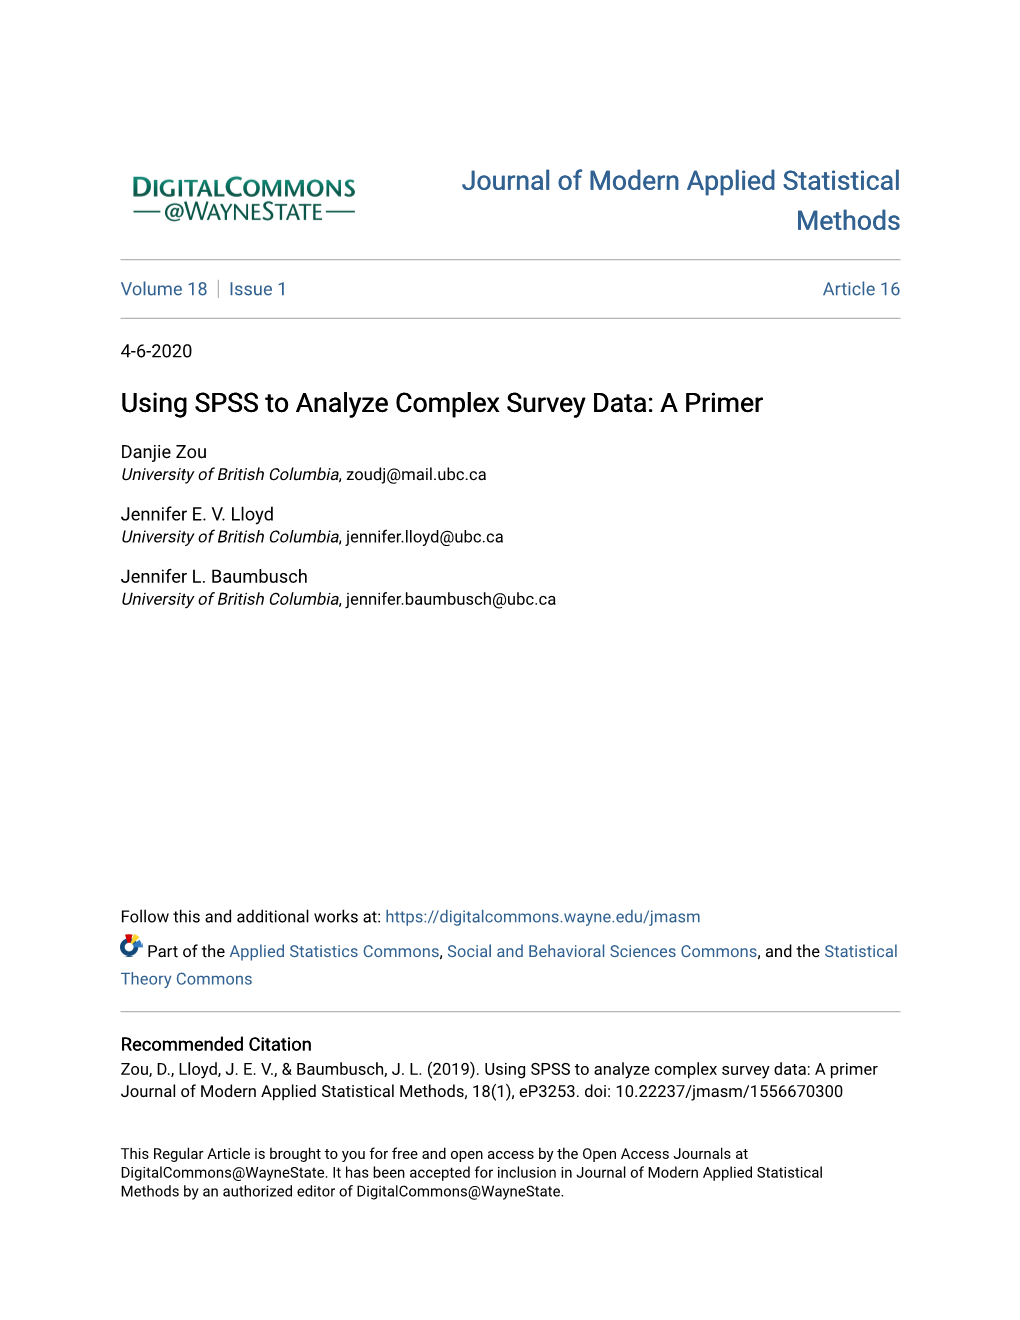 Using SPSS to Analyze Complex Survey Data: a Primer